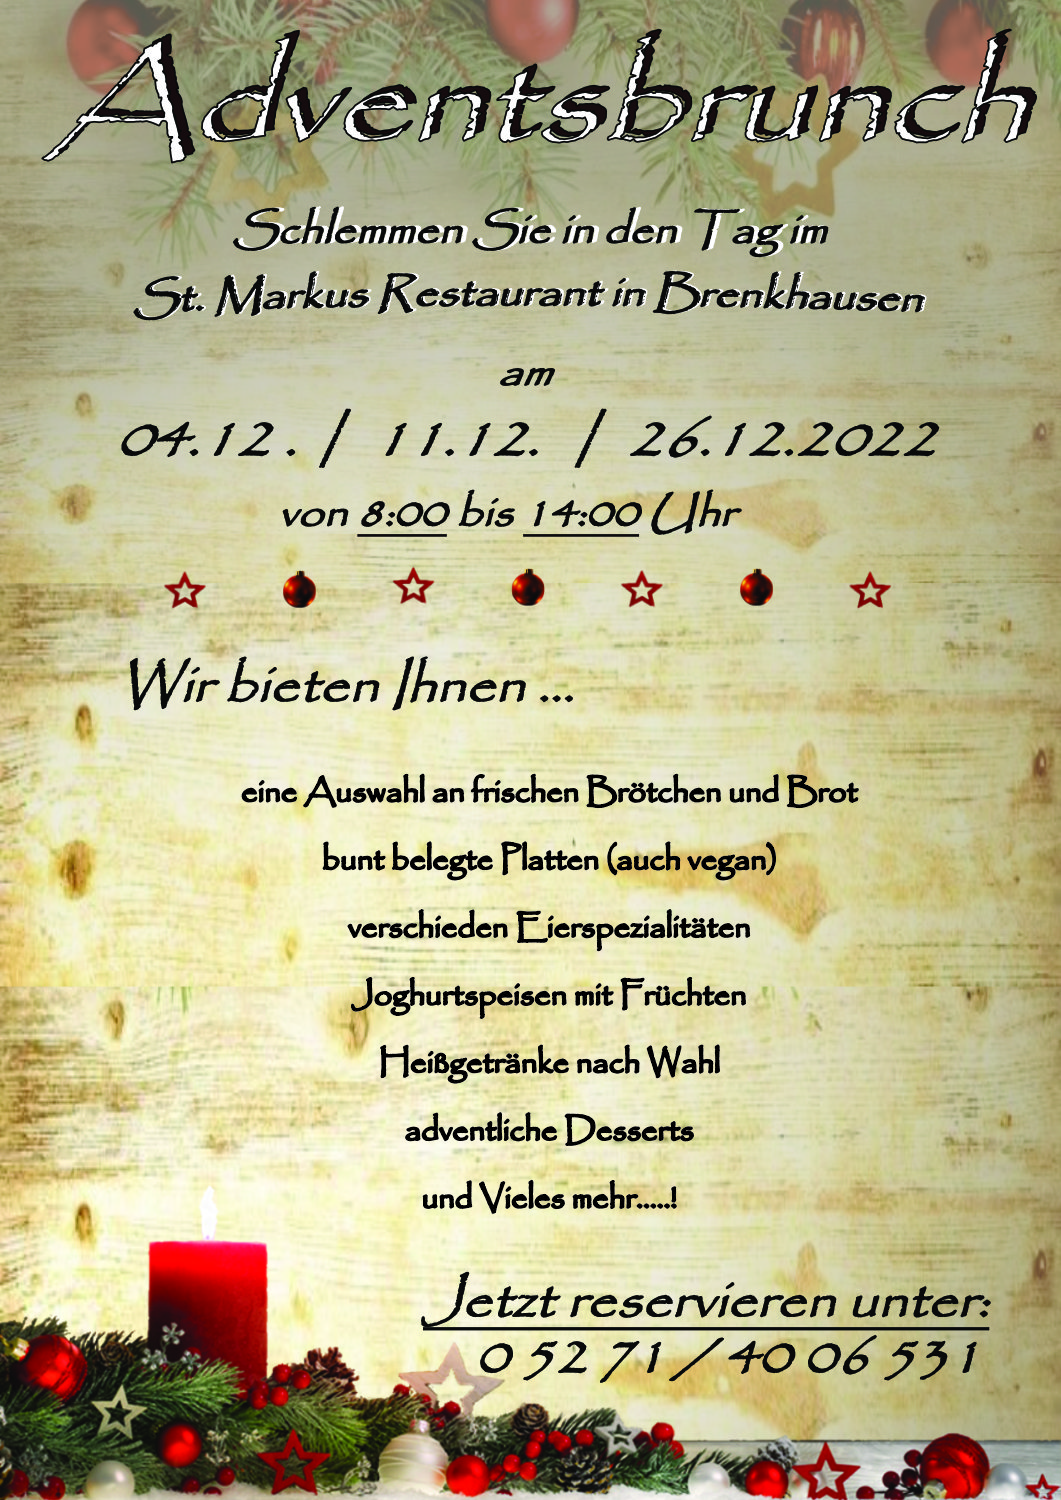 Koptisch-Orthodoxes Kloster St. Markus Restaurant - Dezember Adventsbrunch Angebot 2022